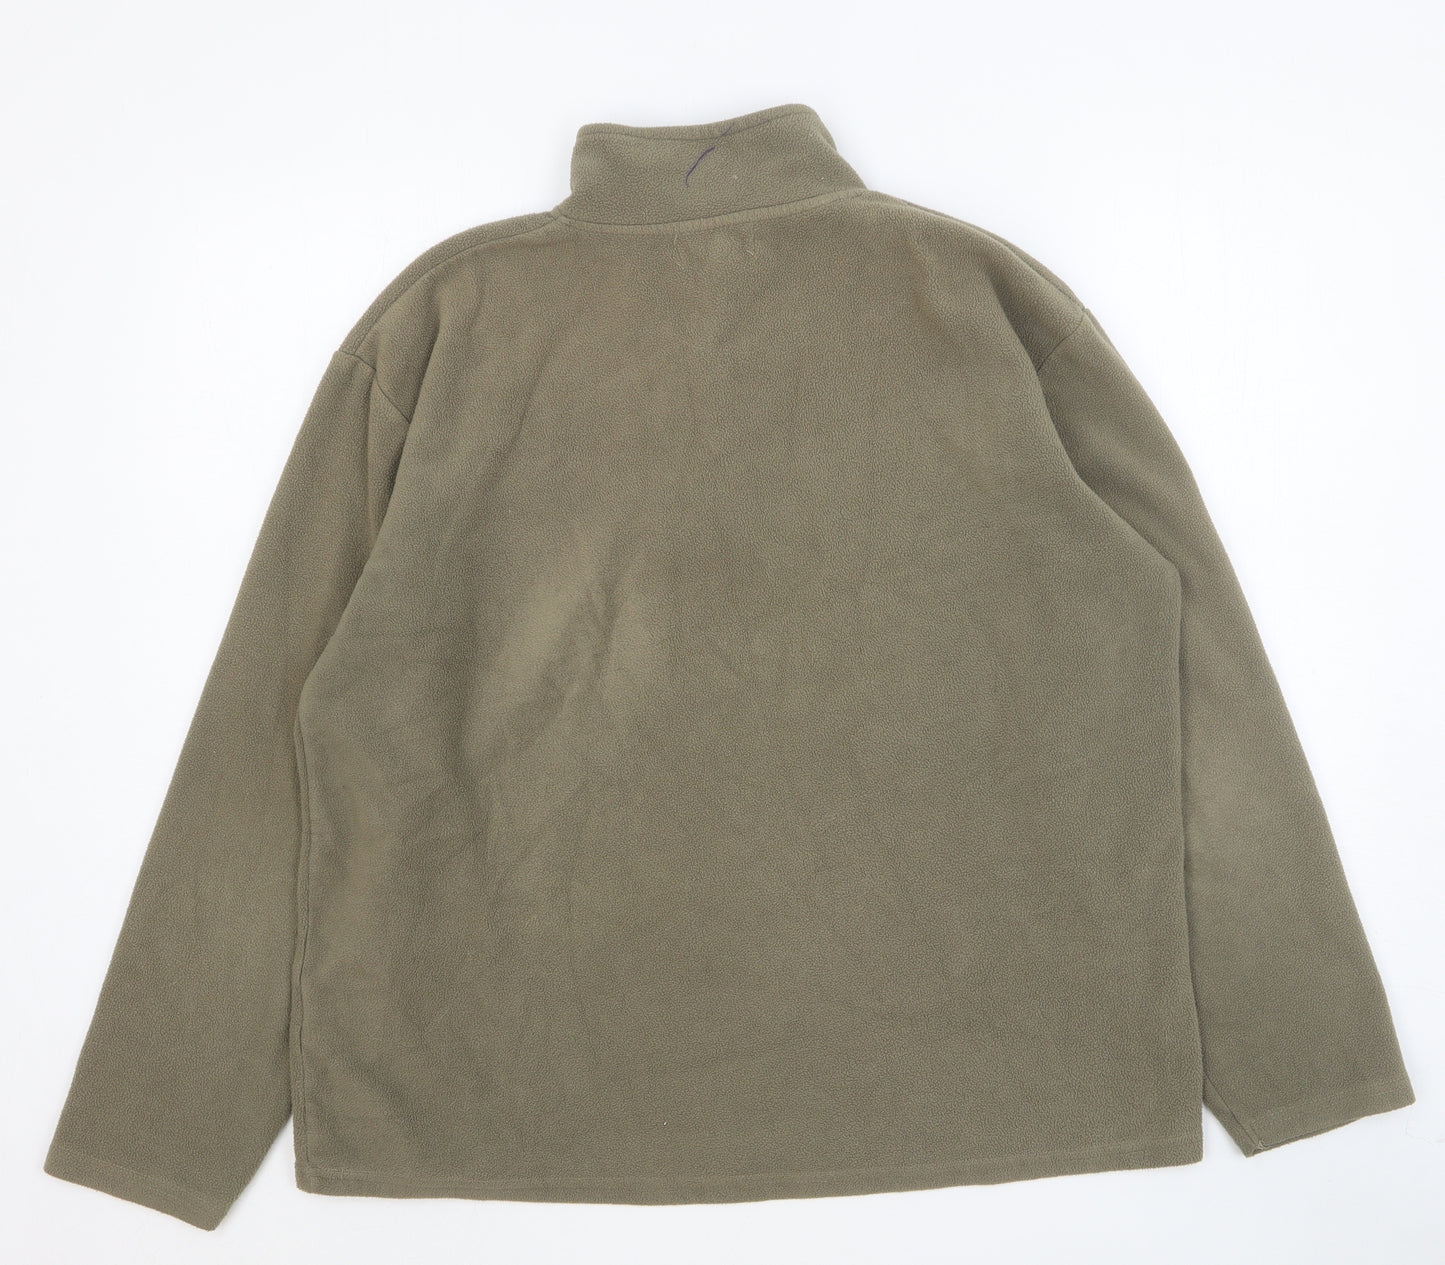 Atlas Mens Brown Polyester Pullover Sweatshirt Size L